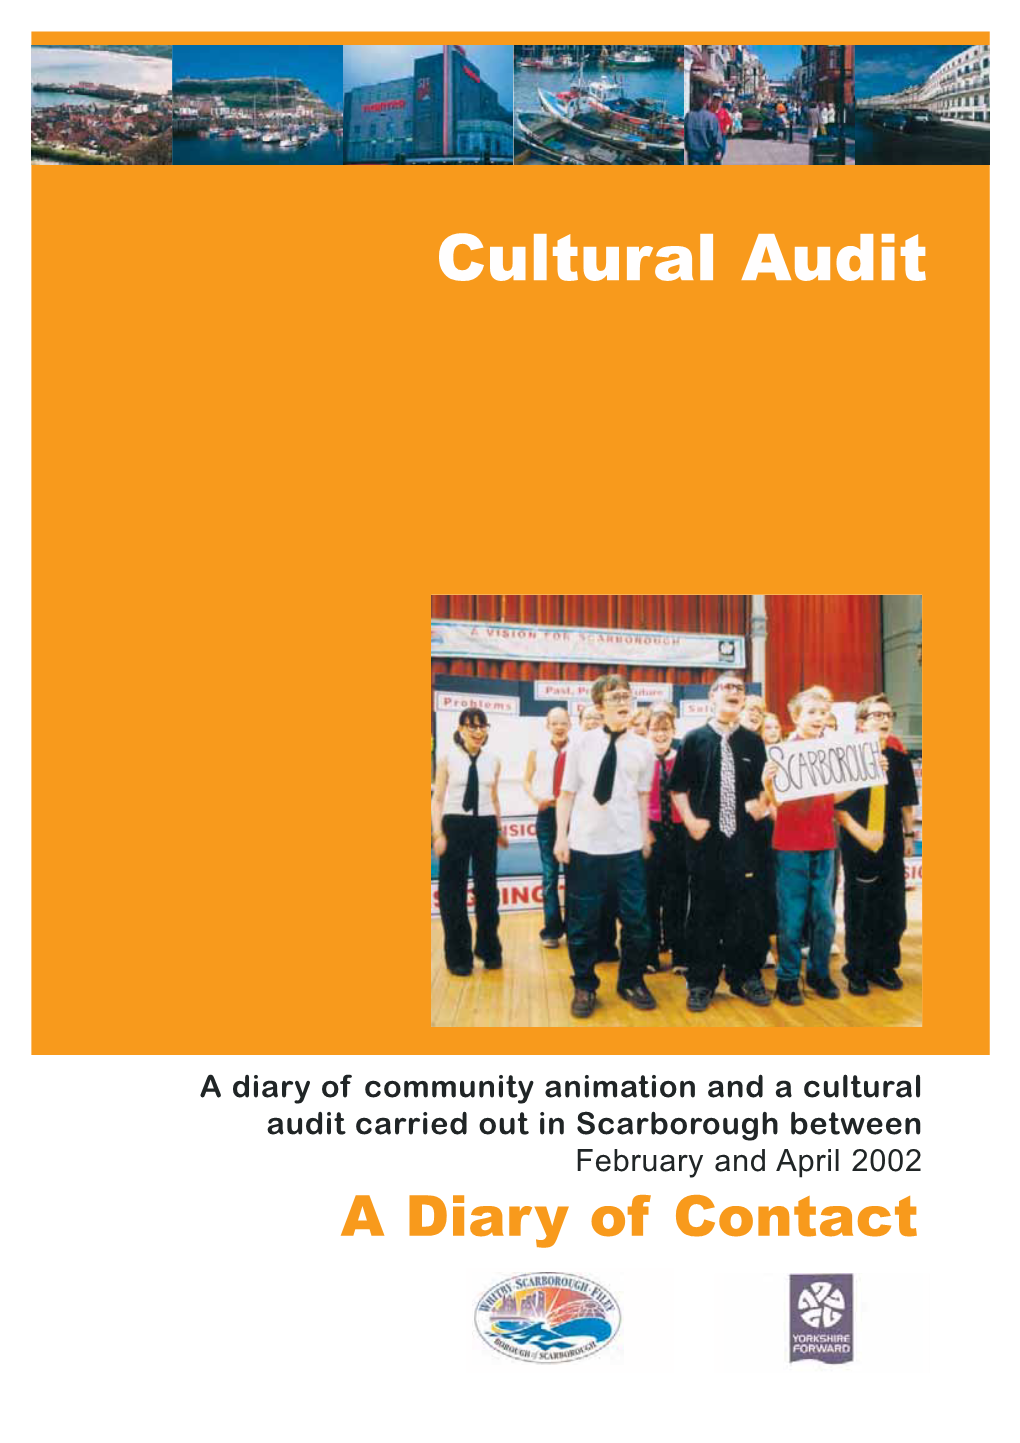 Scarborough Cultural Audit